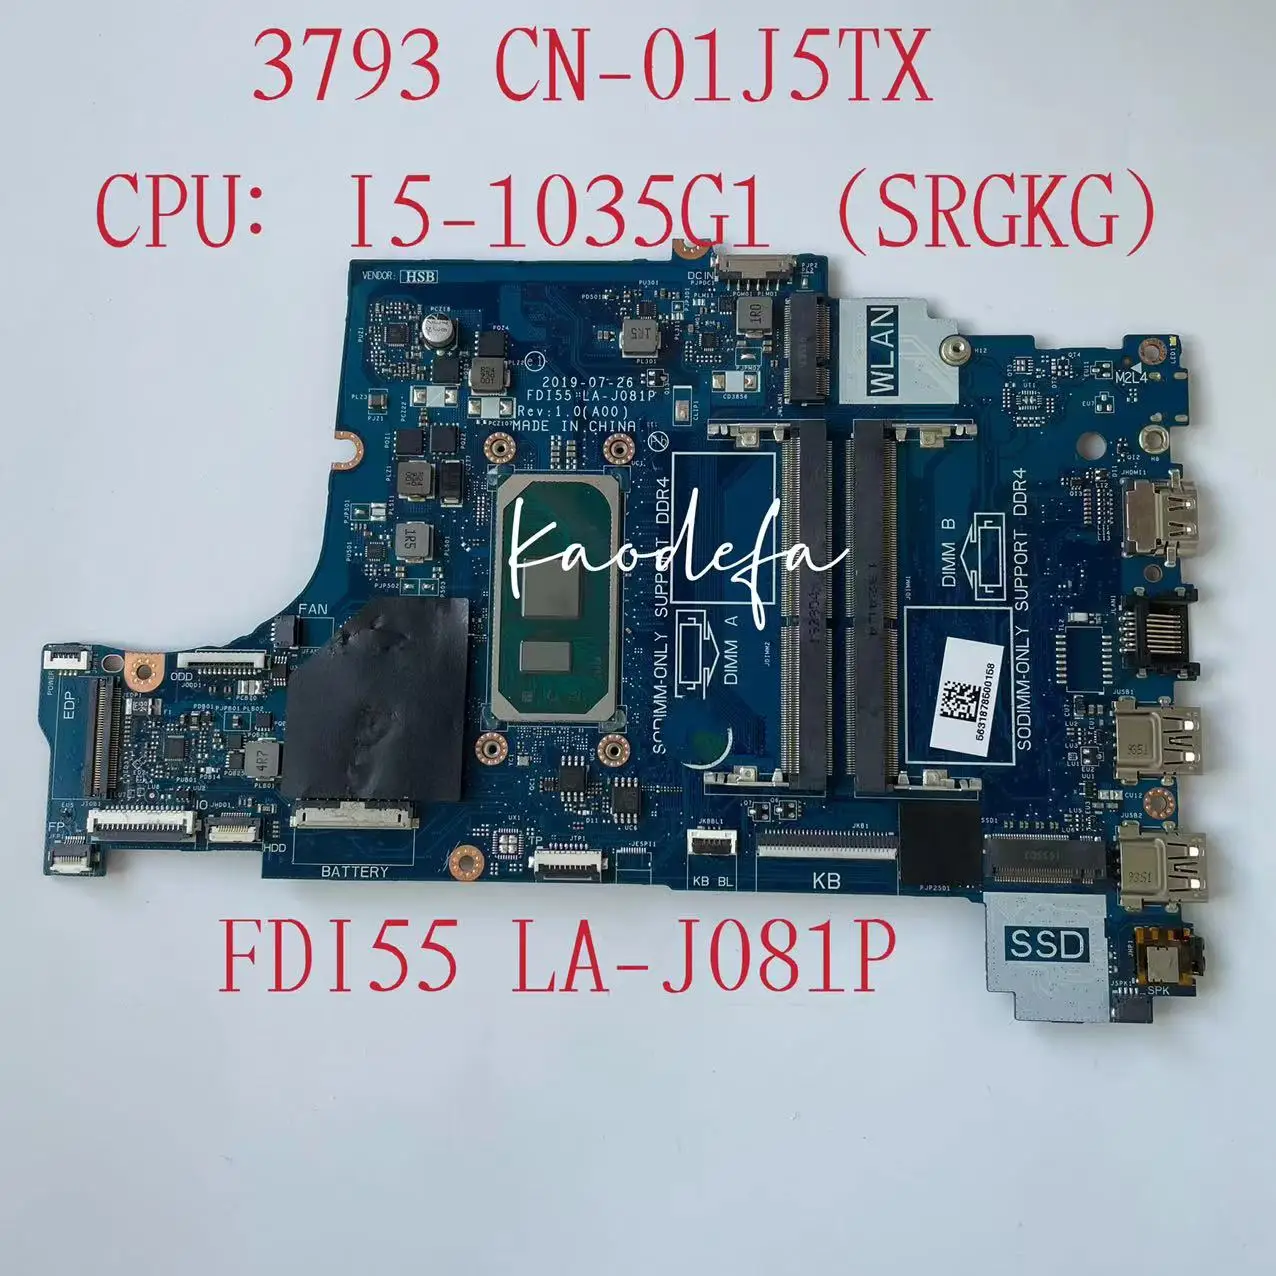 

for DELL INSPIRON 17 3793 5593 Laptop Motherboard CPU: I5-1035G1 DDR4 Notebook Mainboard CN-01J5TX 01J5TX 1J5TX FDI55- LA-J081P